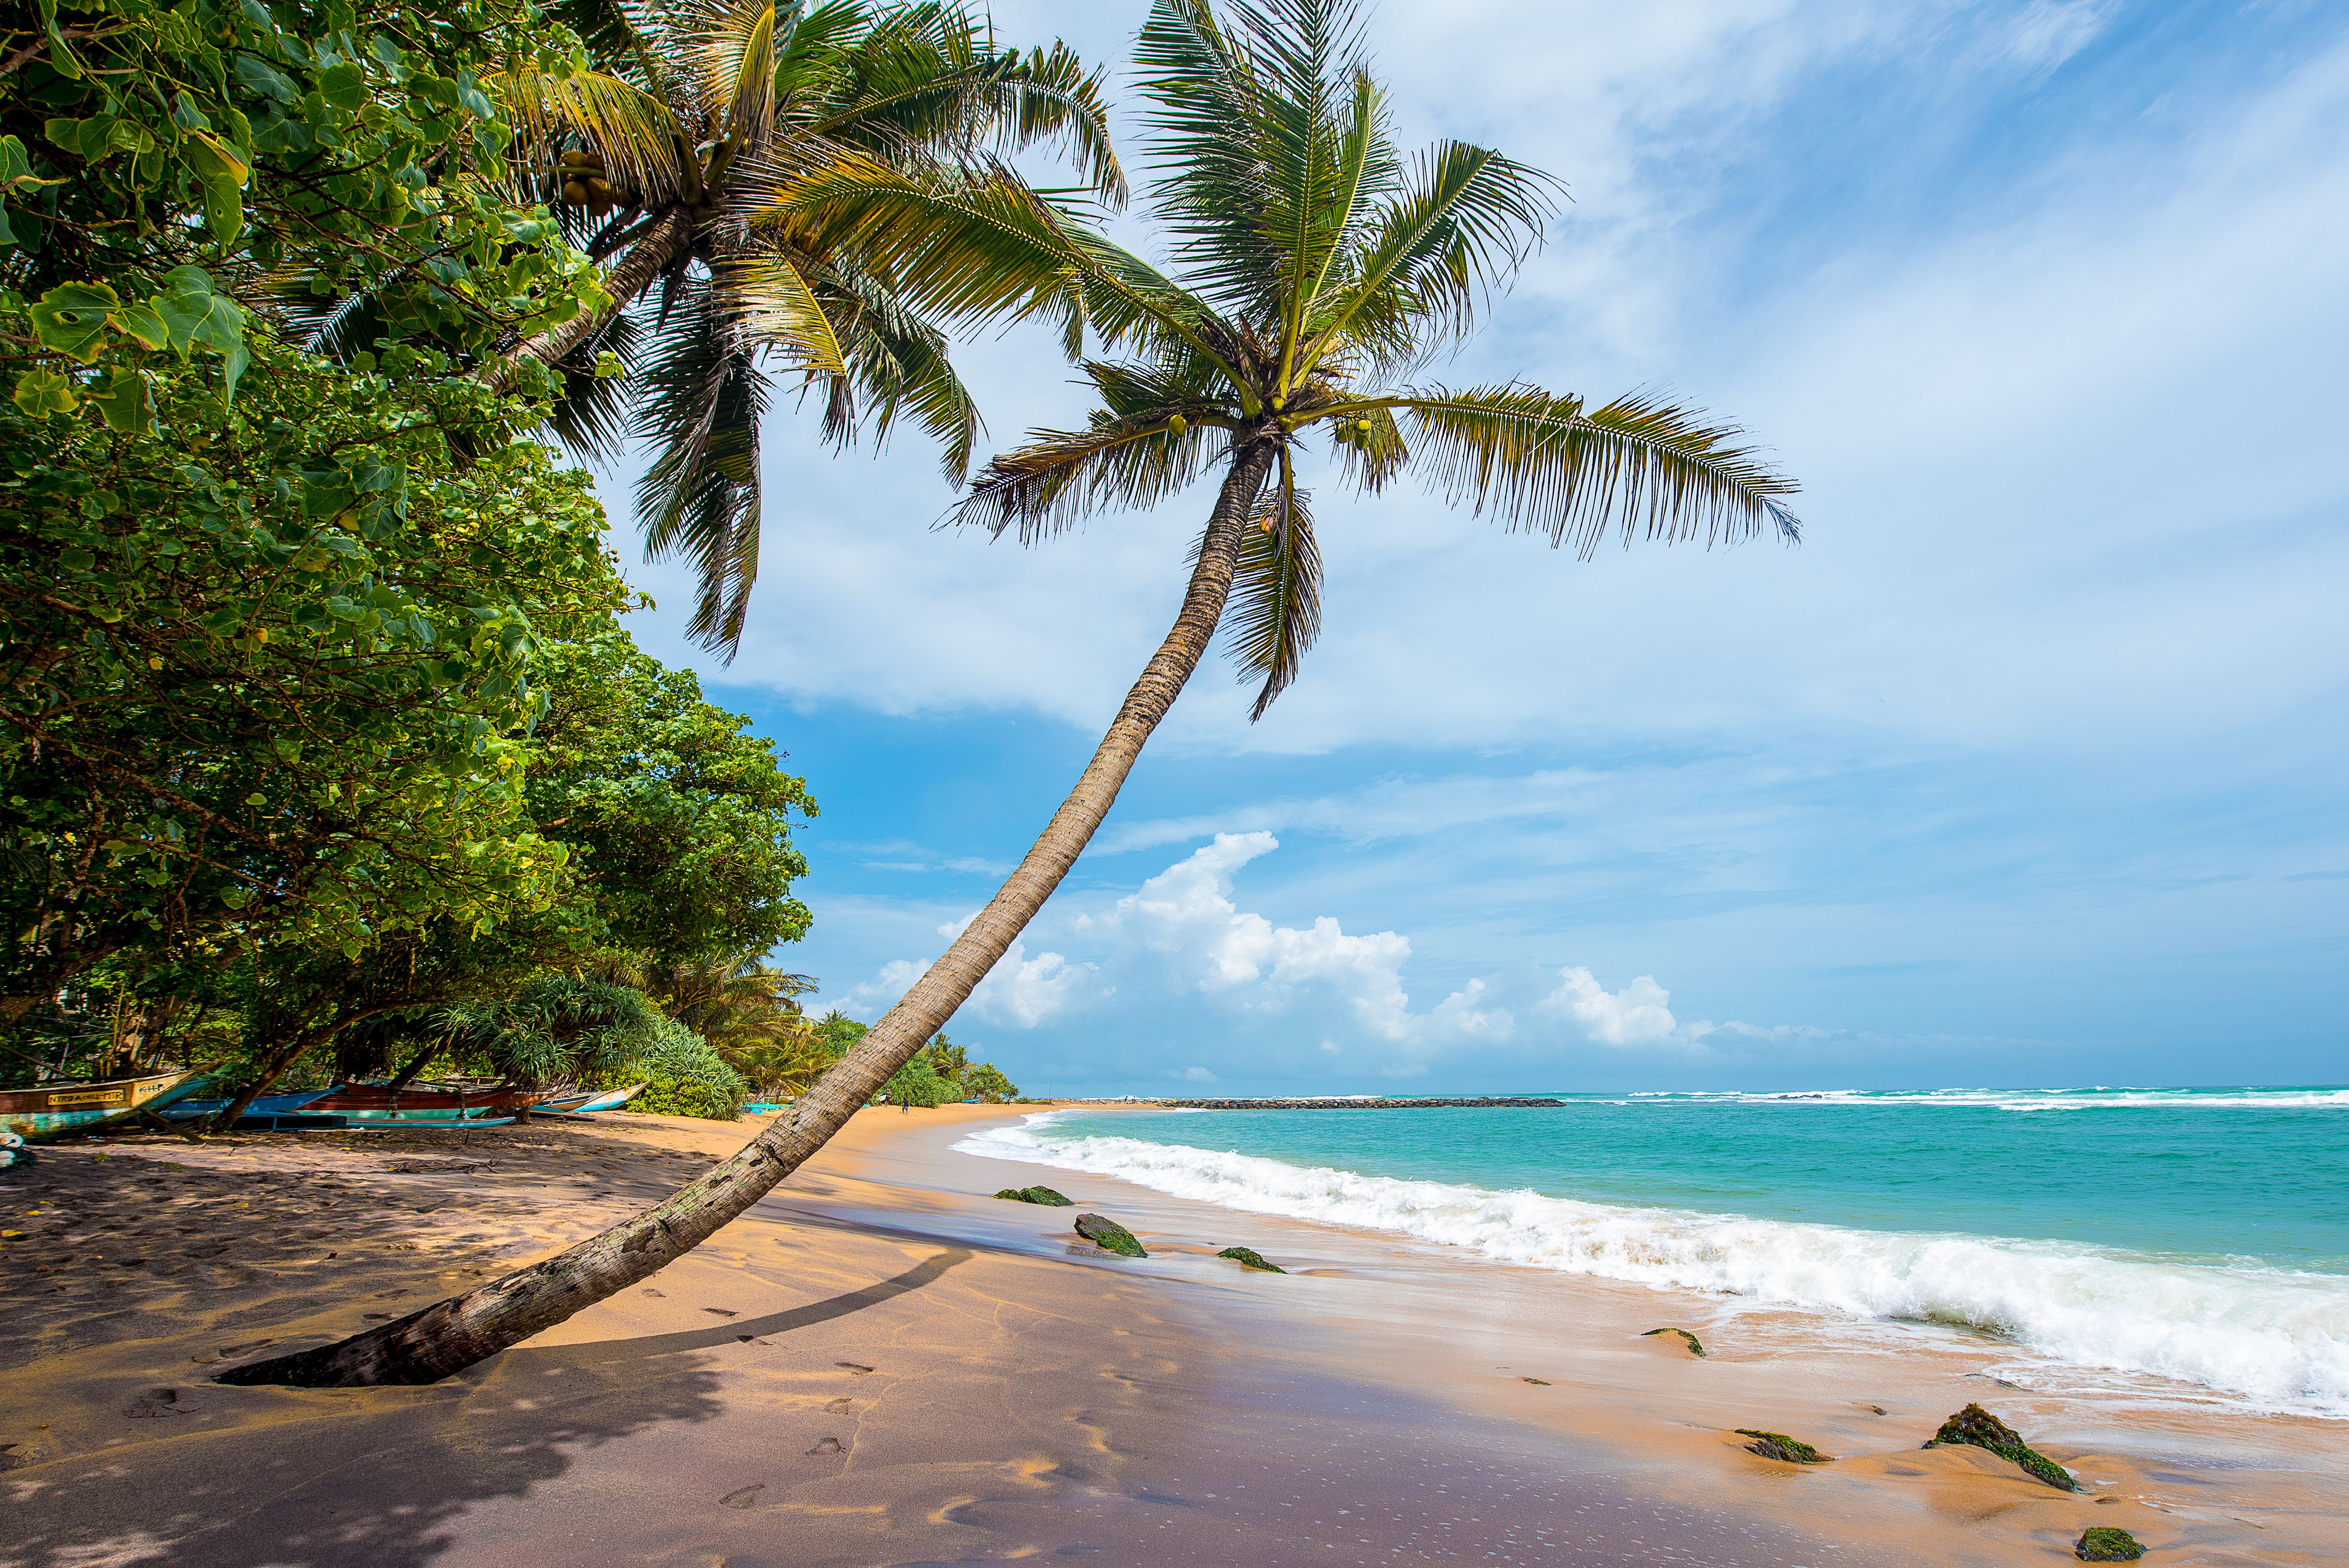 Best Beaches in Sri Lanka: Top 4 Beaches to Enjoy